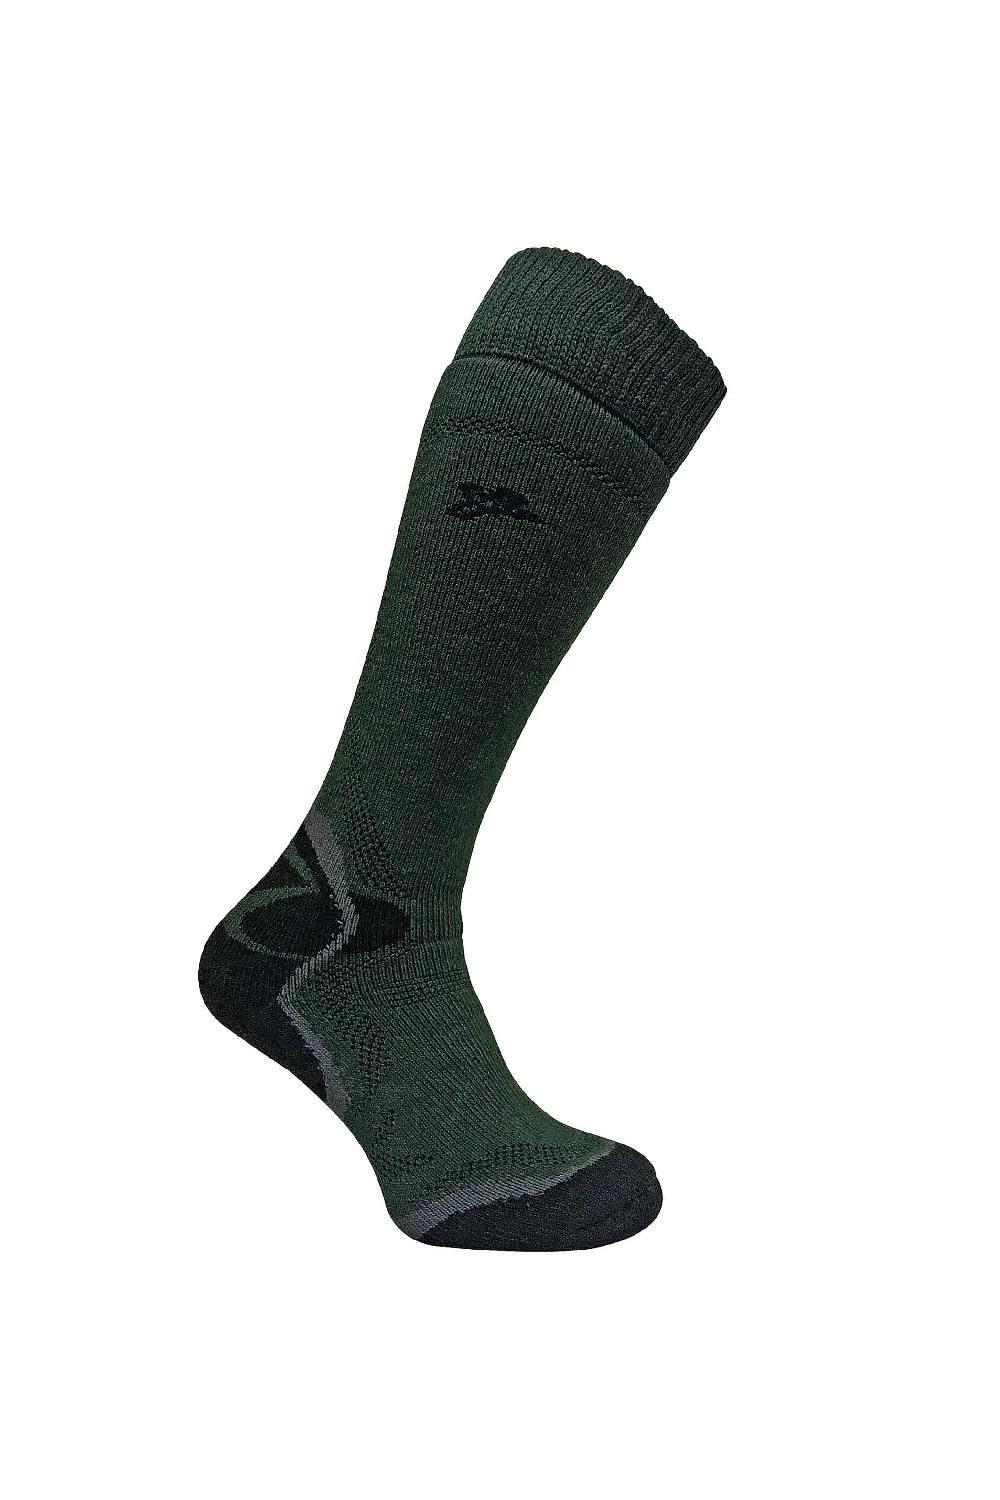 Merino Wool Long Knee High Padded Heel Green Socks